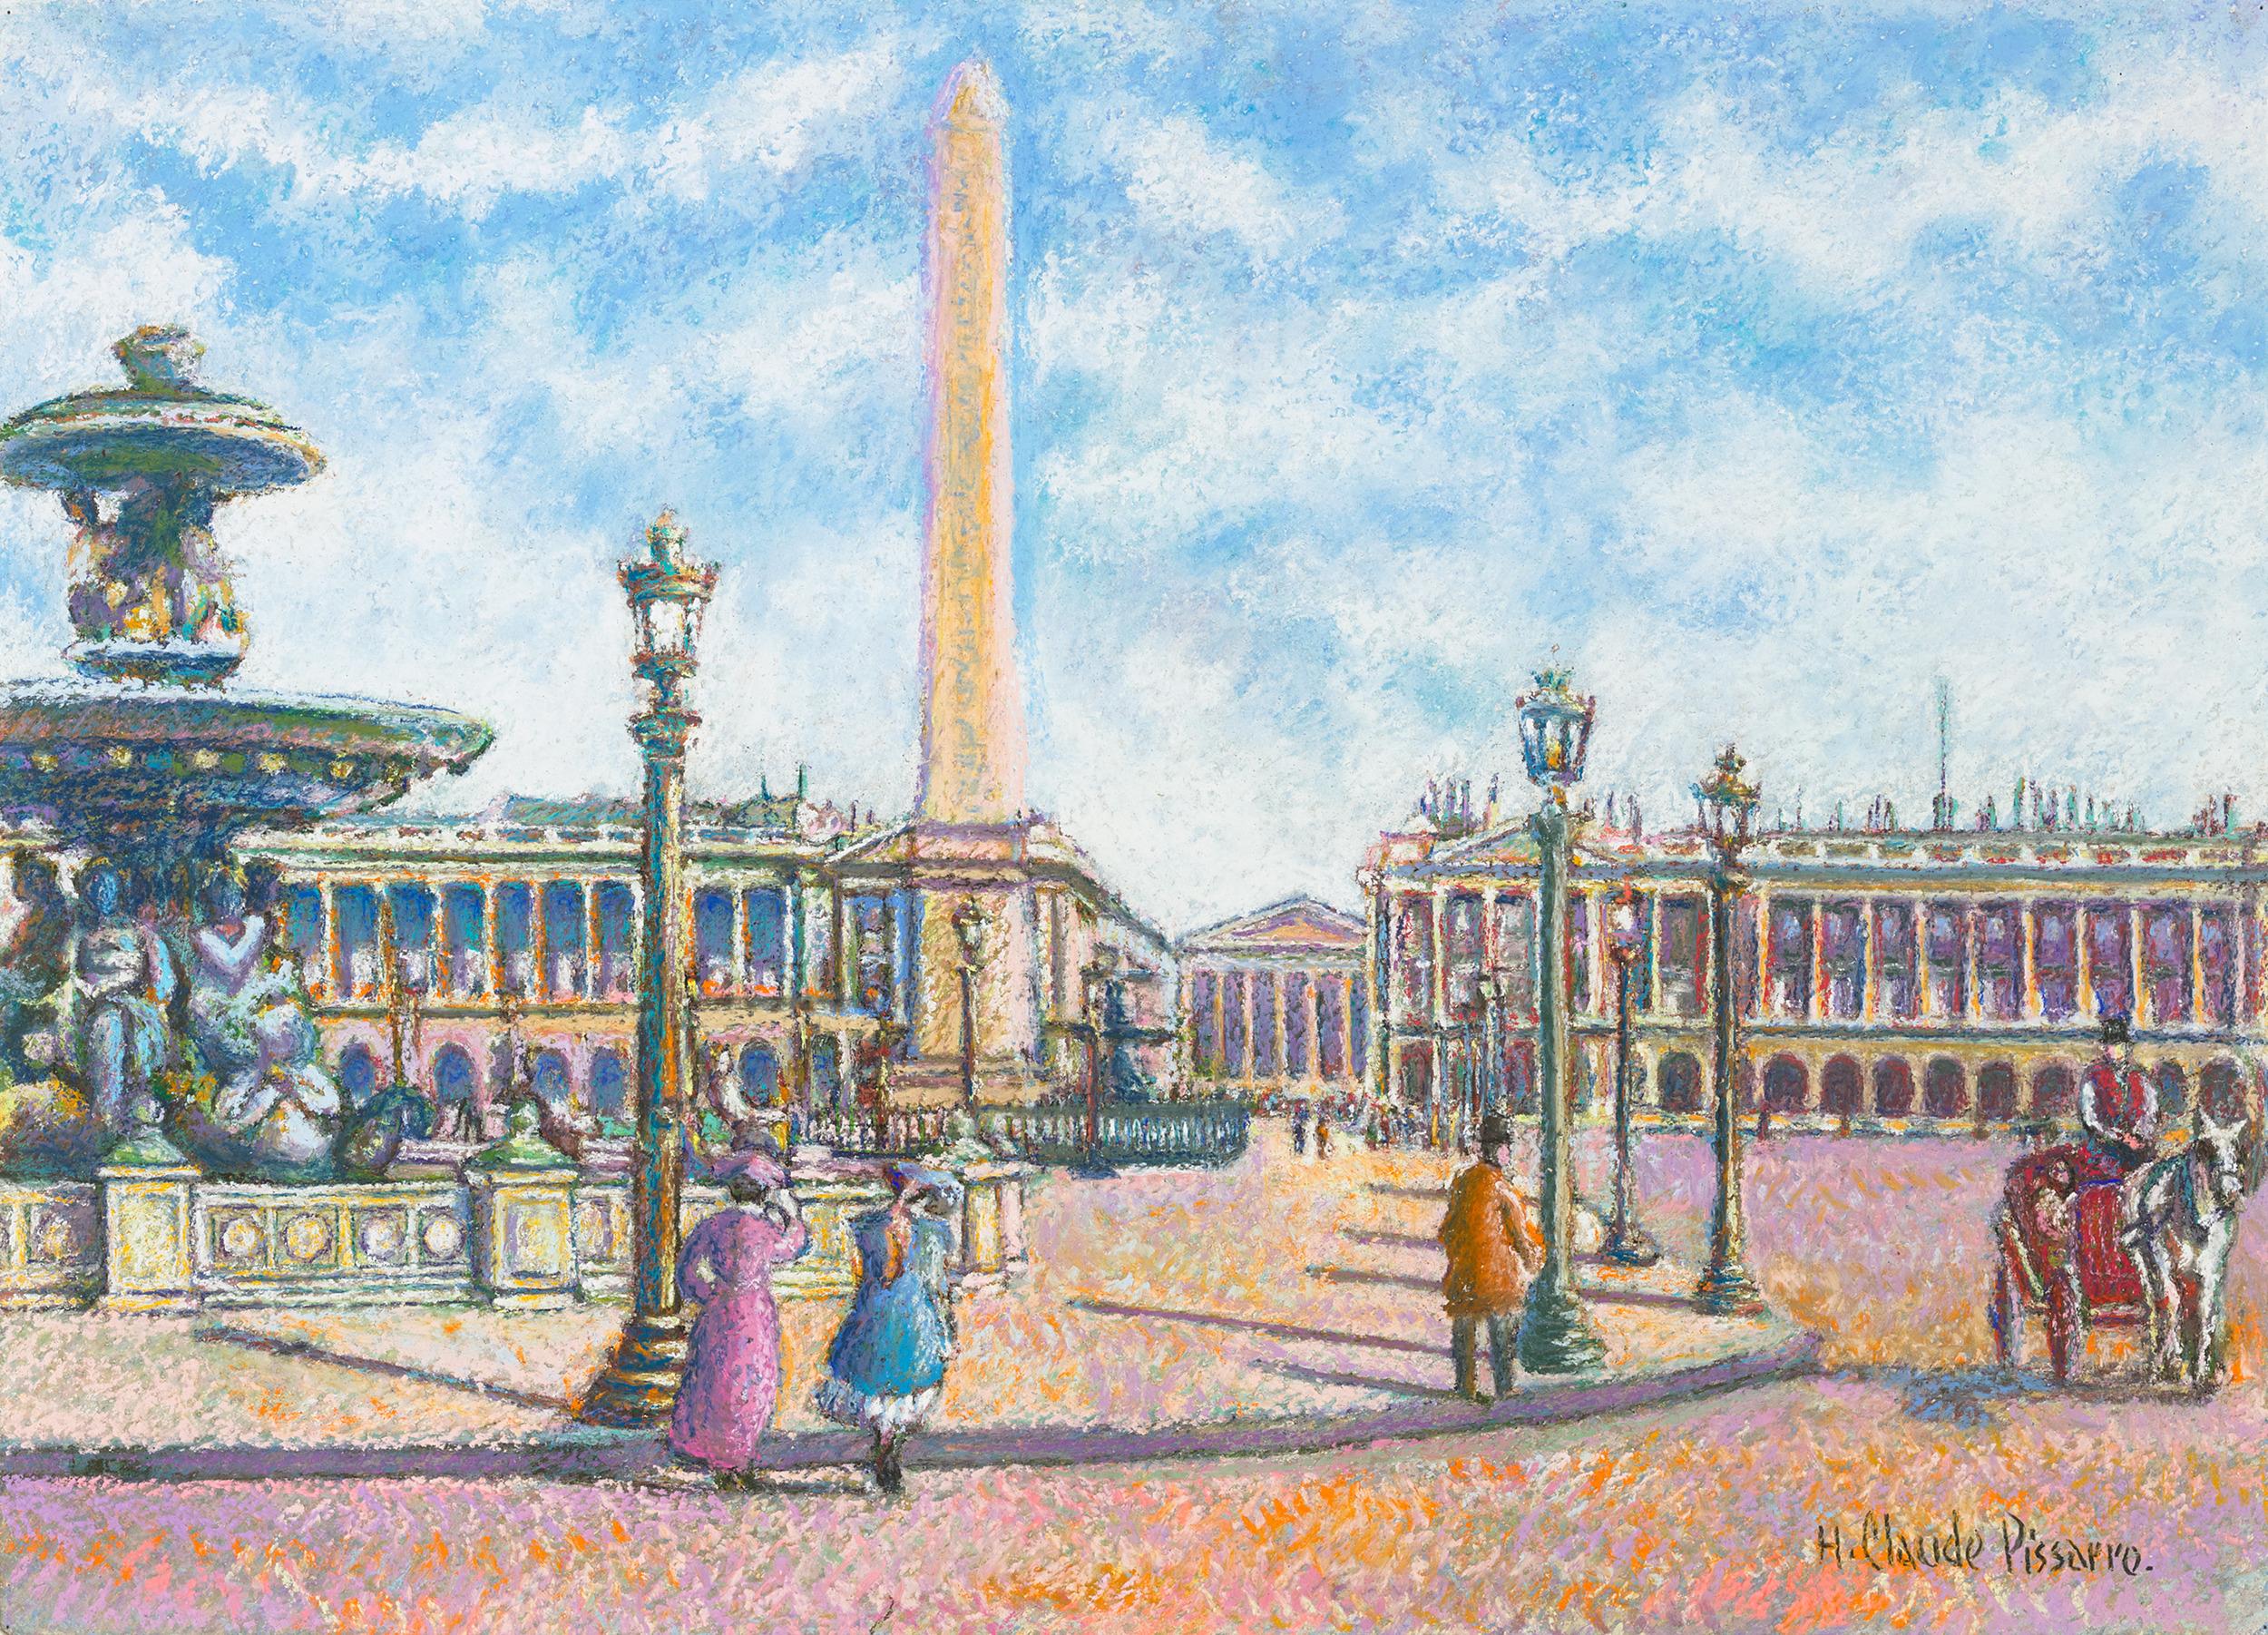 Hughes Claude Pissarro Landscape Art - La Place de la Concorde, Paris by H. Claude Pissarro